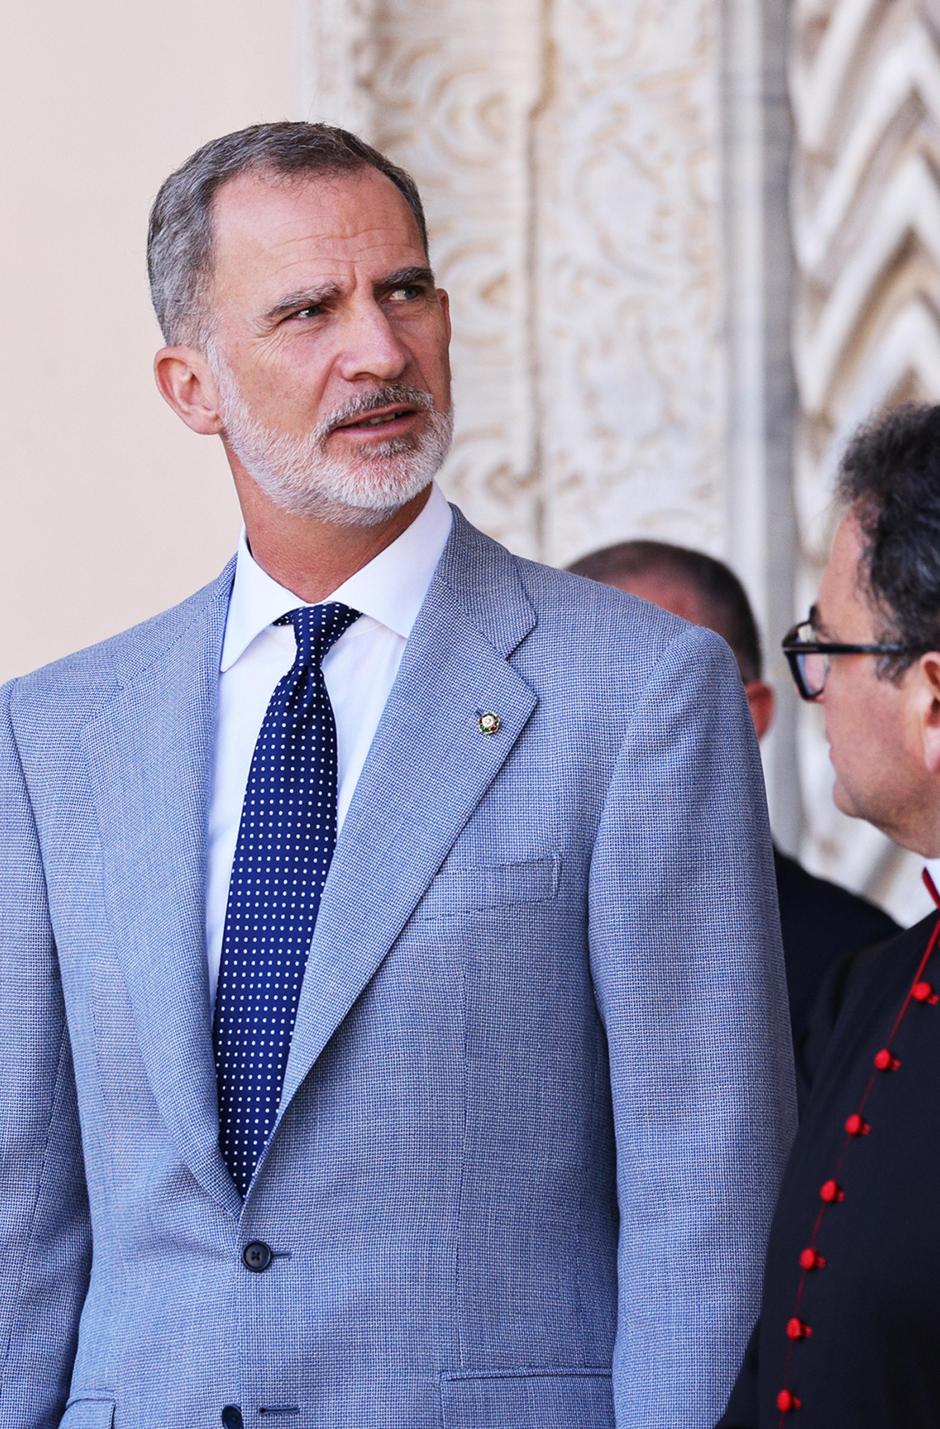 King of Spain Felipe VI during a meeting in Palermo